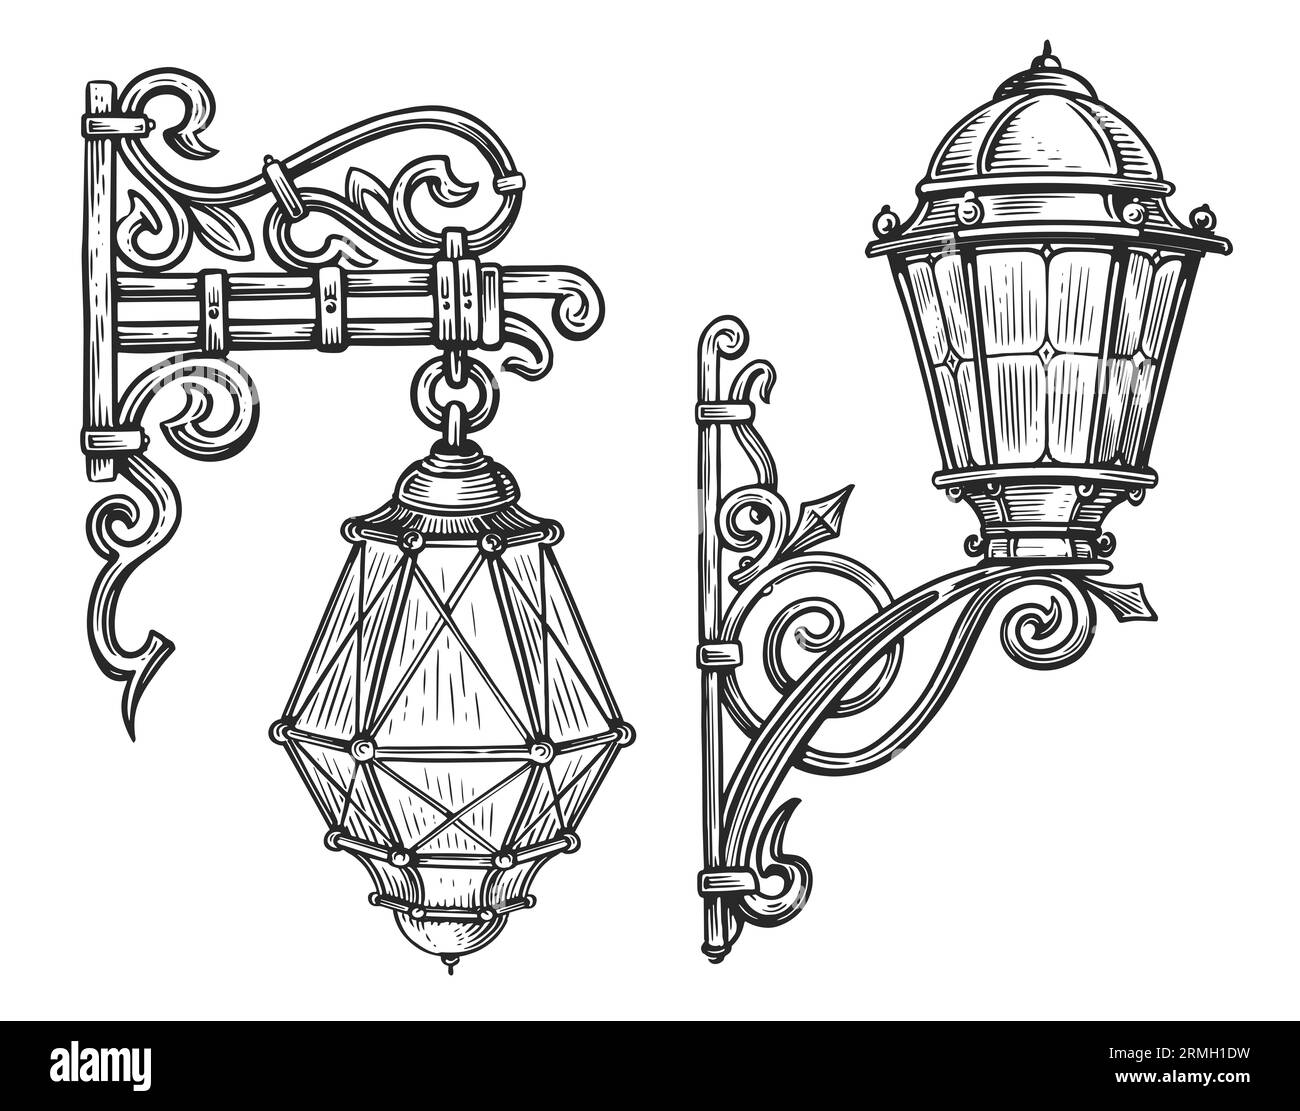 magic lantern sketches by belweking on DeviantArt